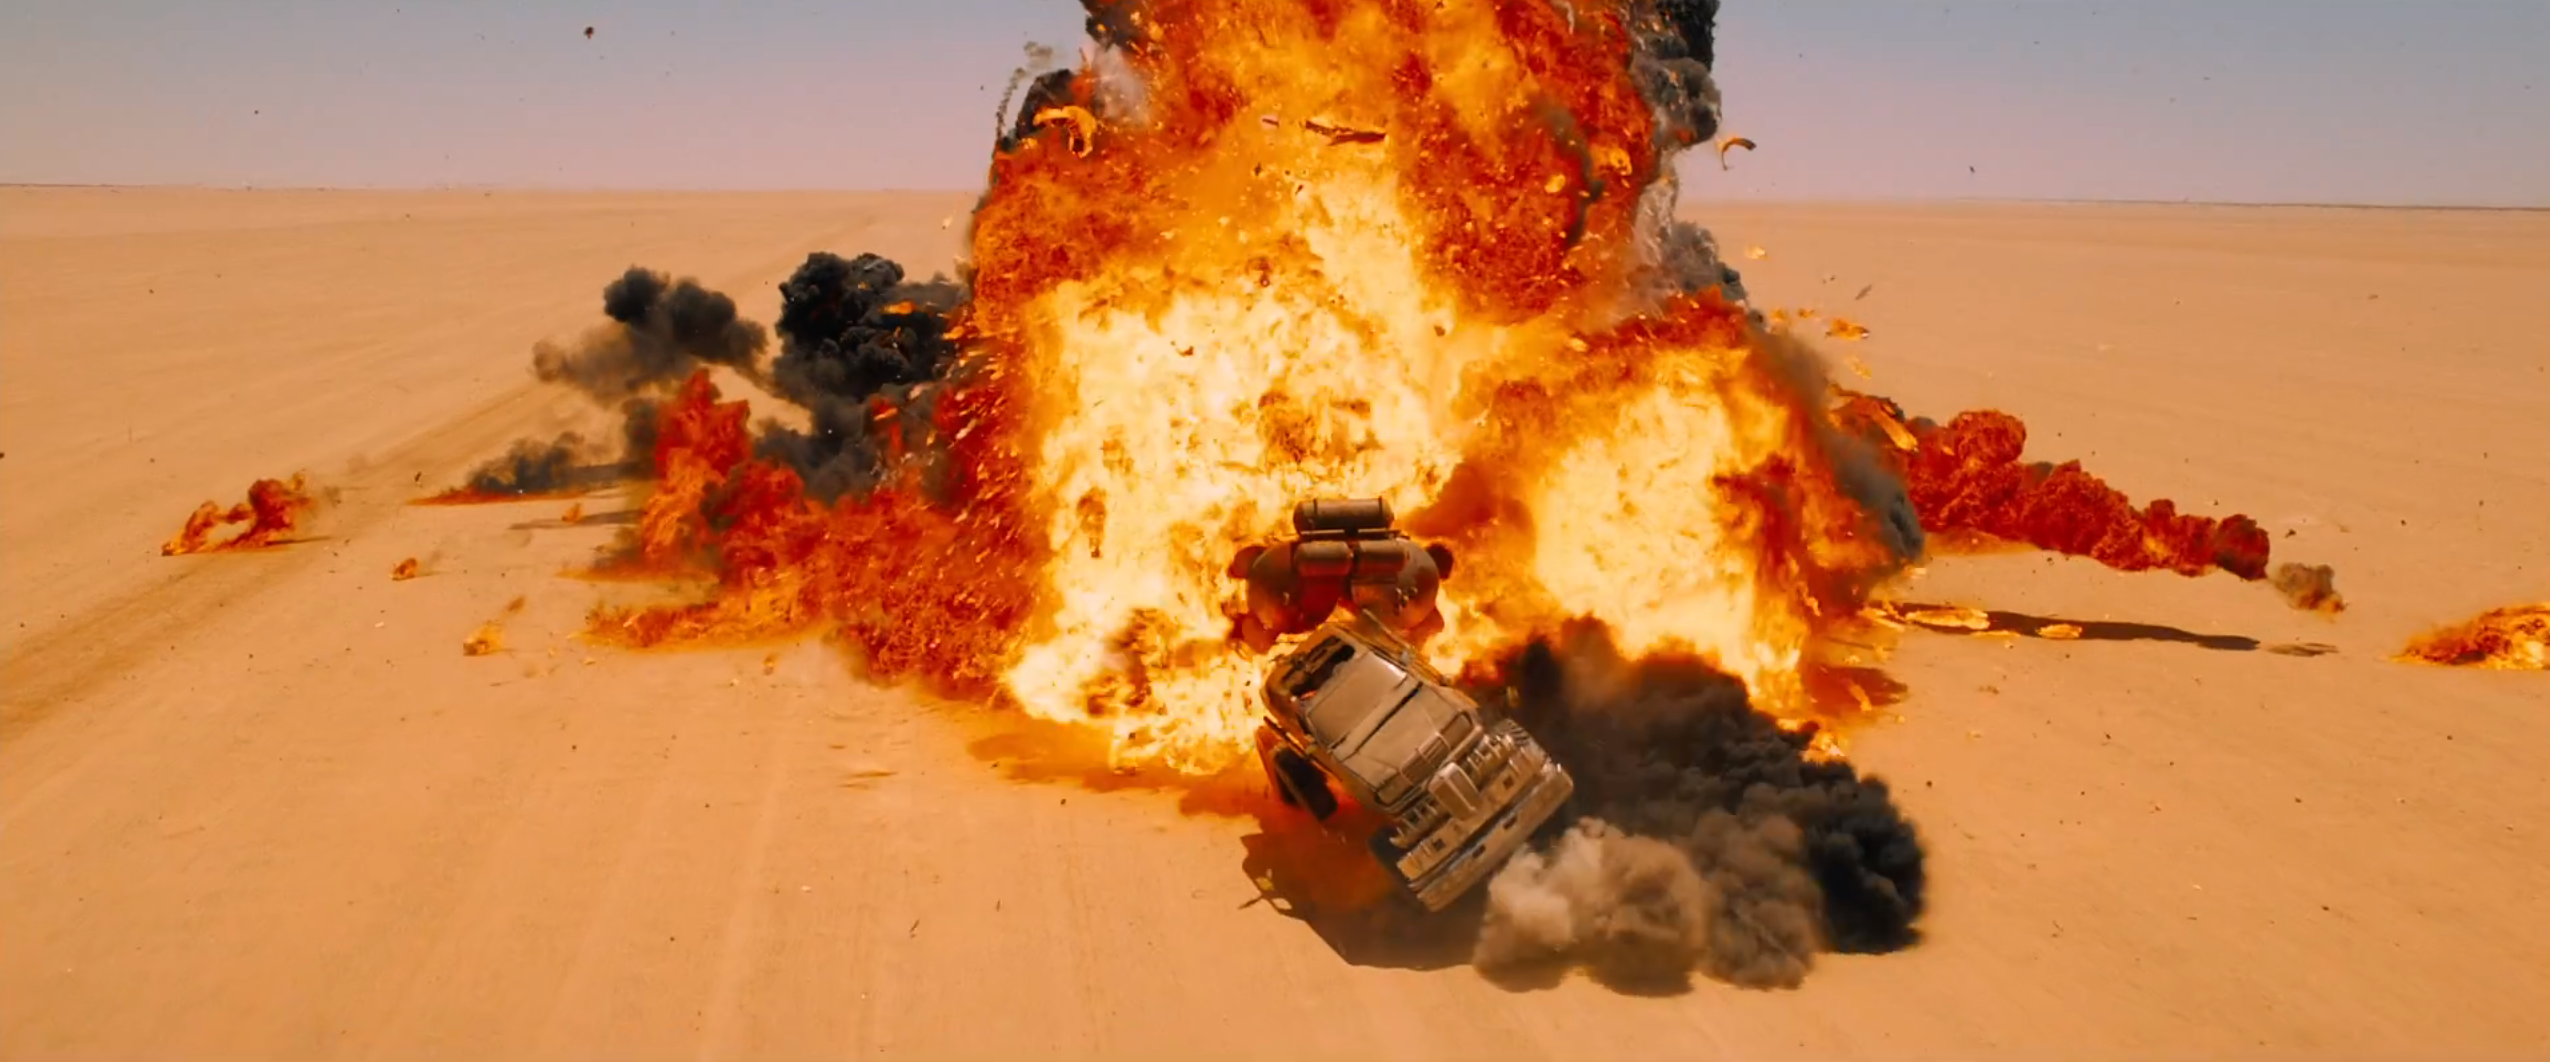 Movie Mad Max: Fury Road Wallpaper